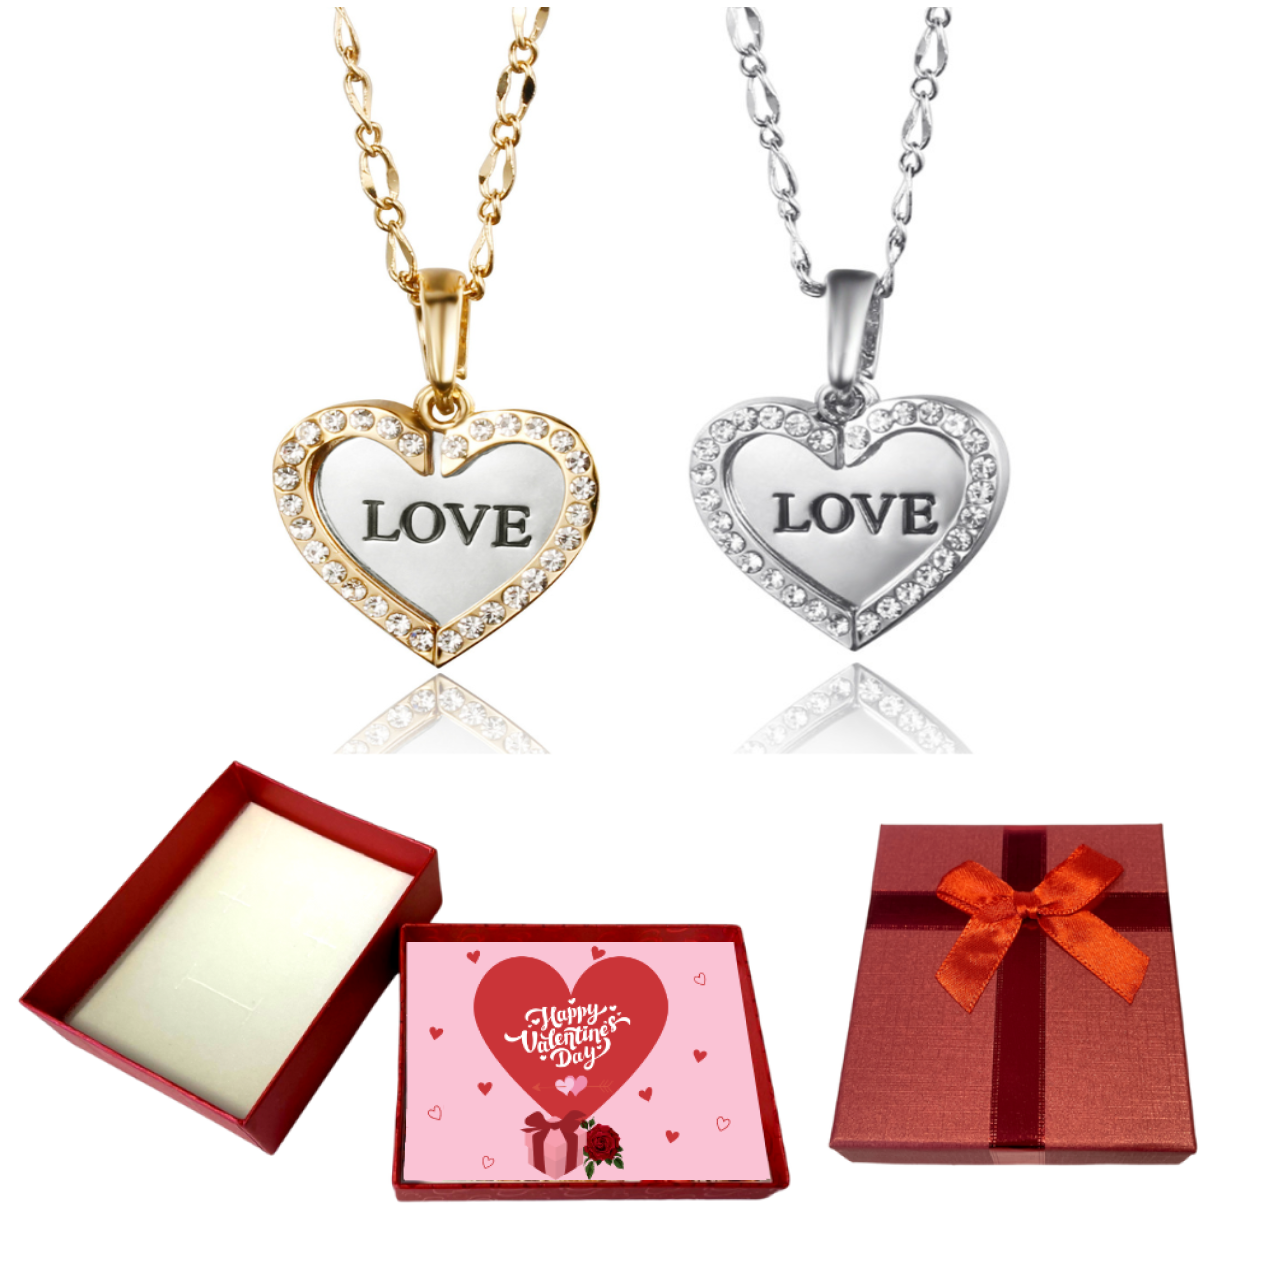 10 pcs - Sparkling Aqua Teardrop Pendant Necklace & Earrings Set With Valentine Gift Box - Mixed Colour|GCJ181-Gold/Silver-Valentine Box|UK SELLER